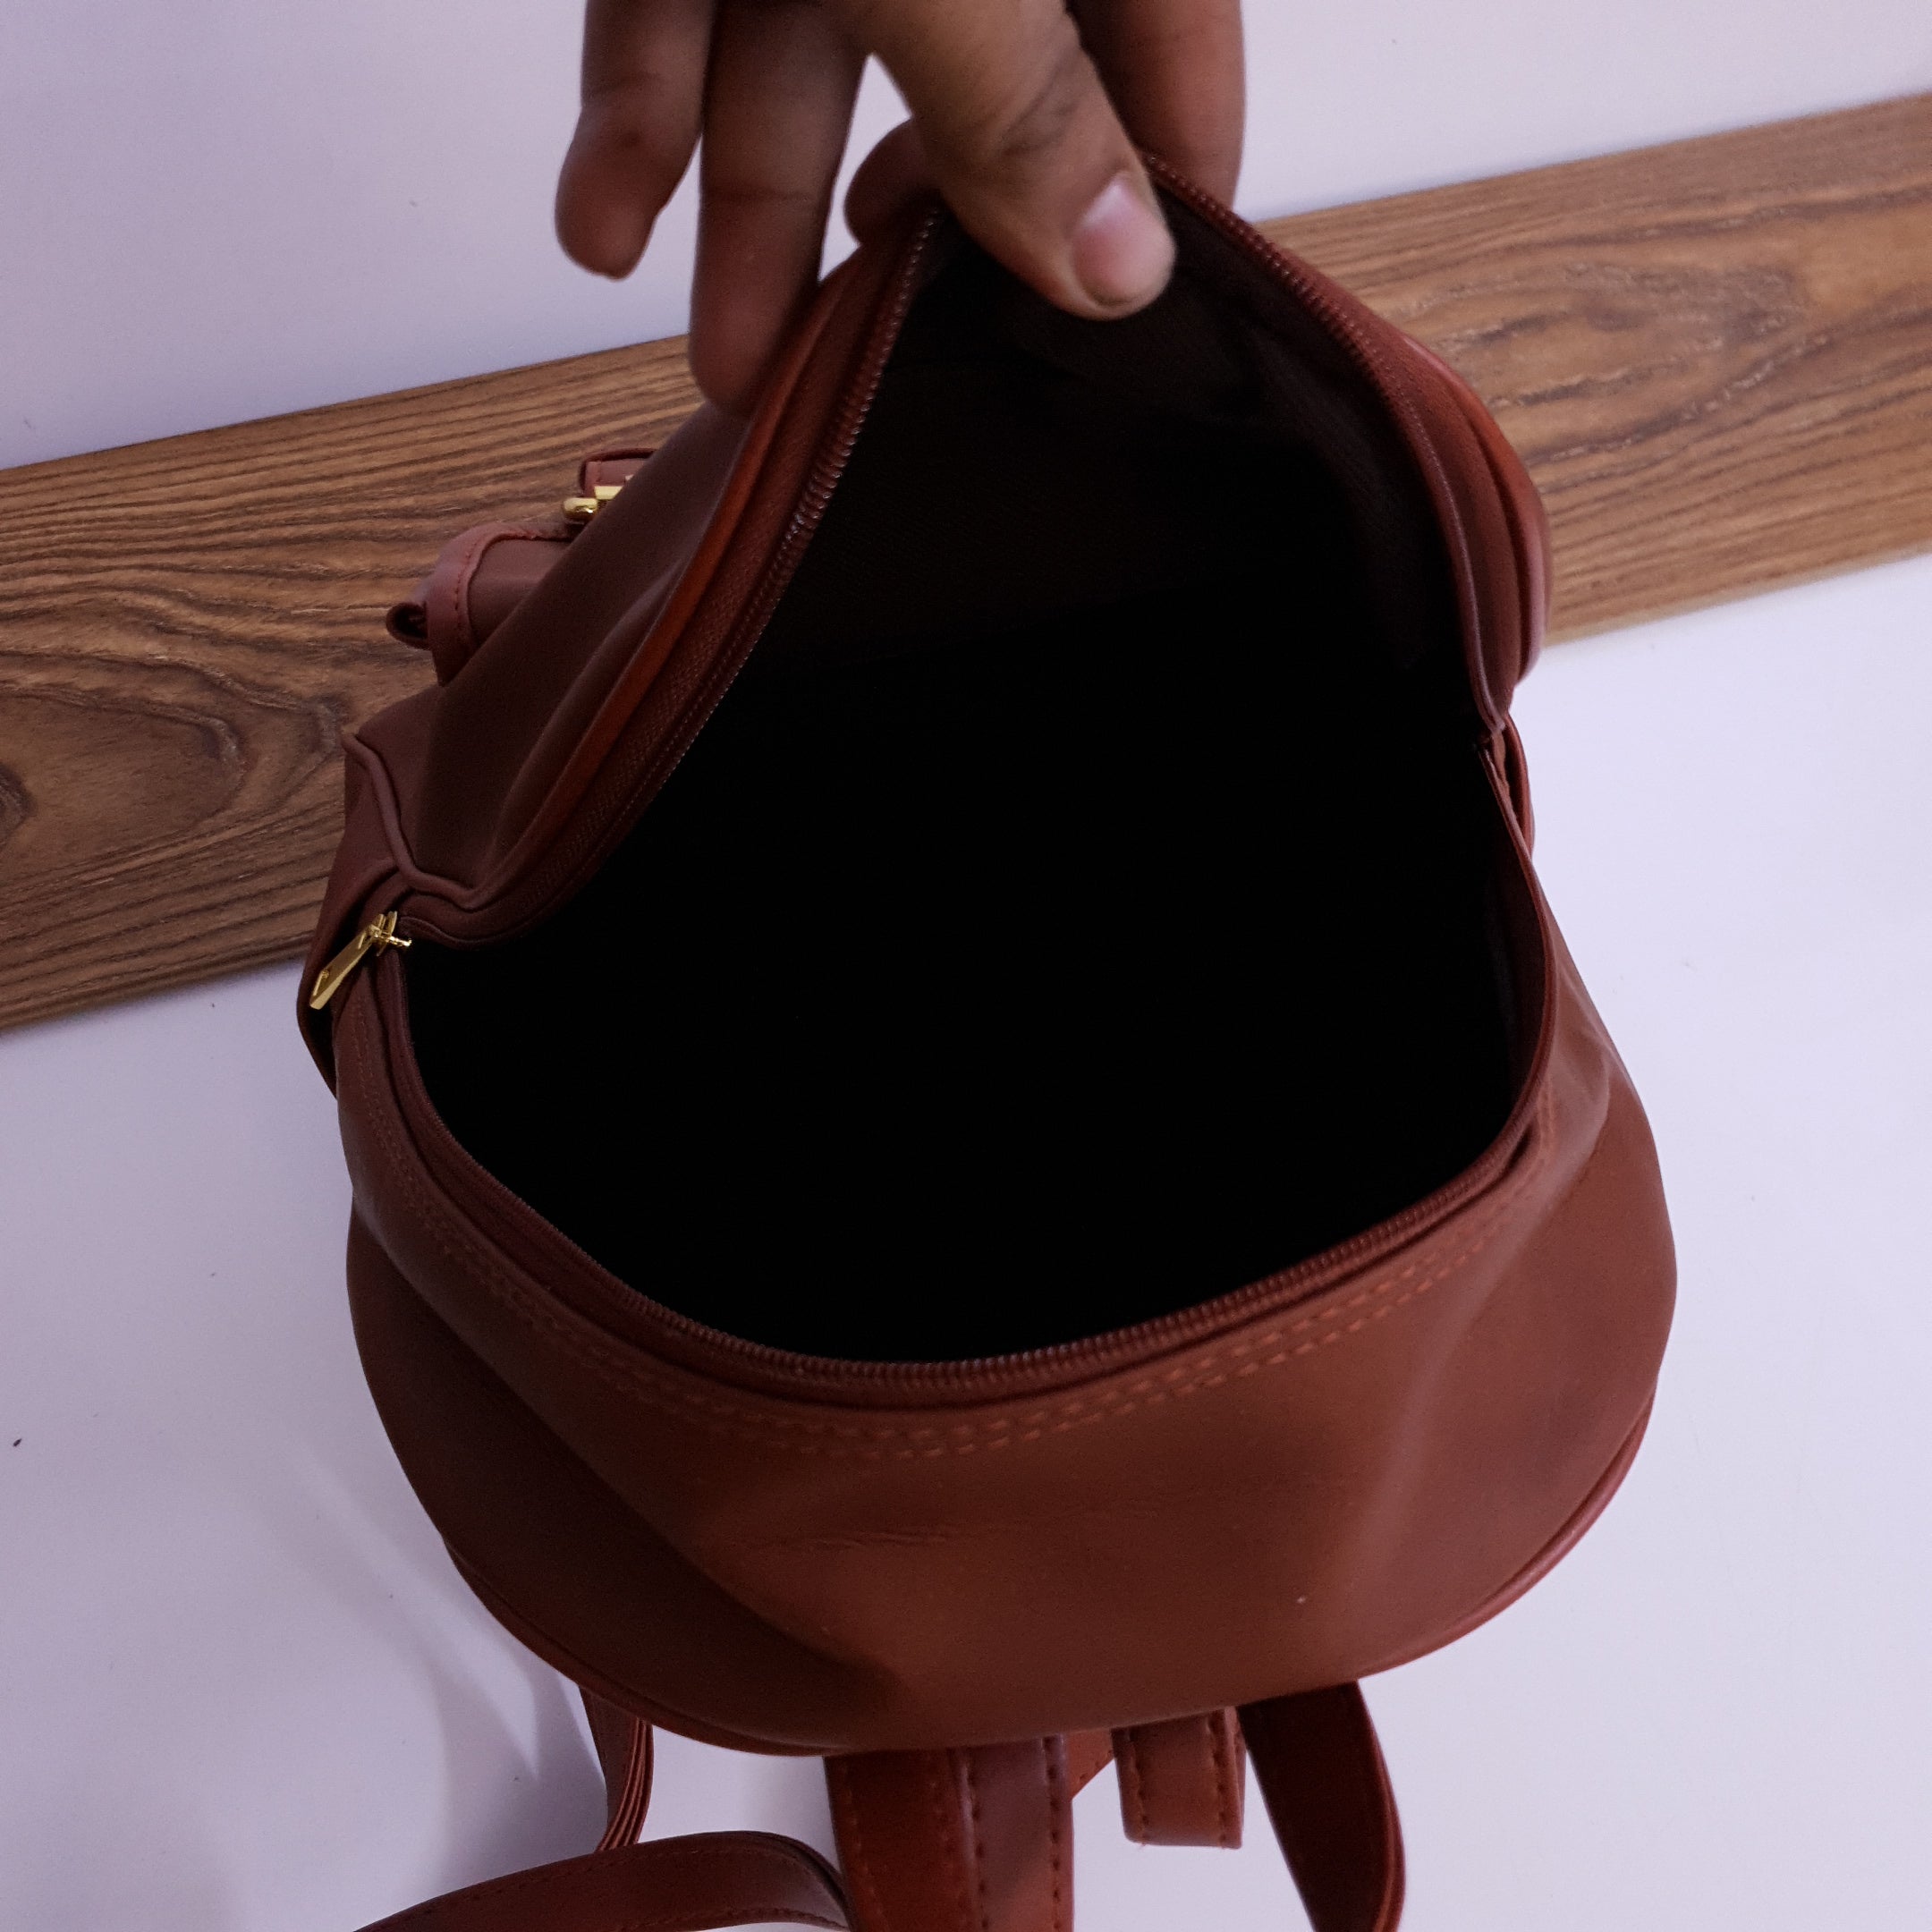 Leather Backpacks - Maha fashions -  bagpacks